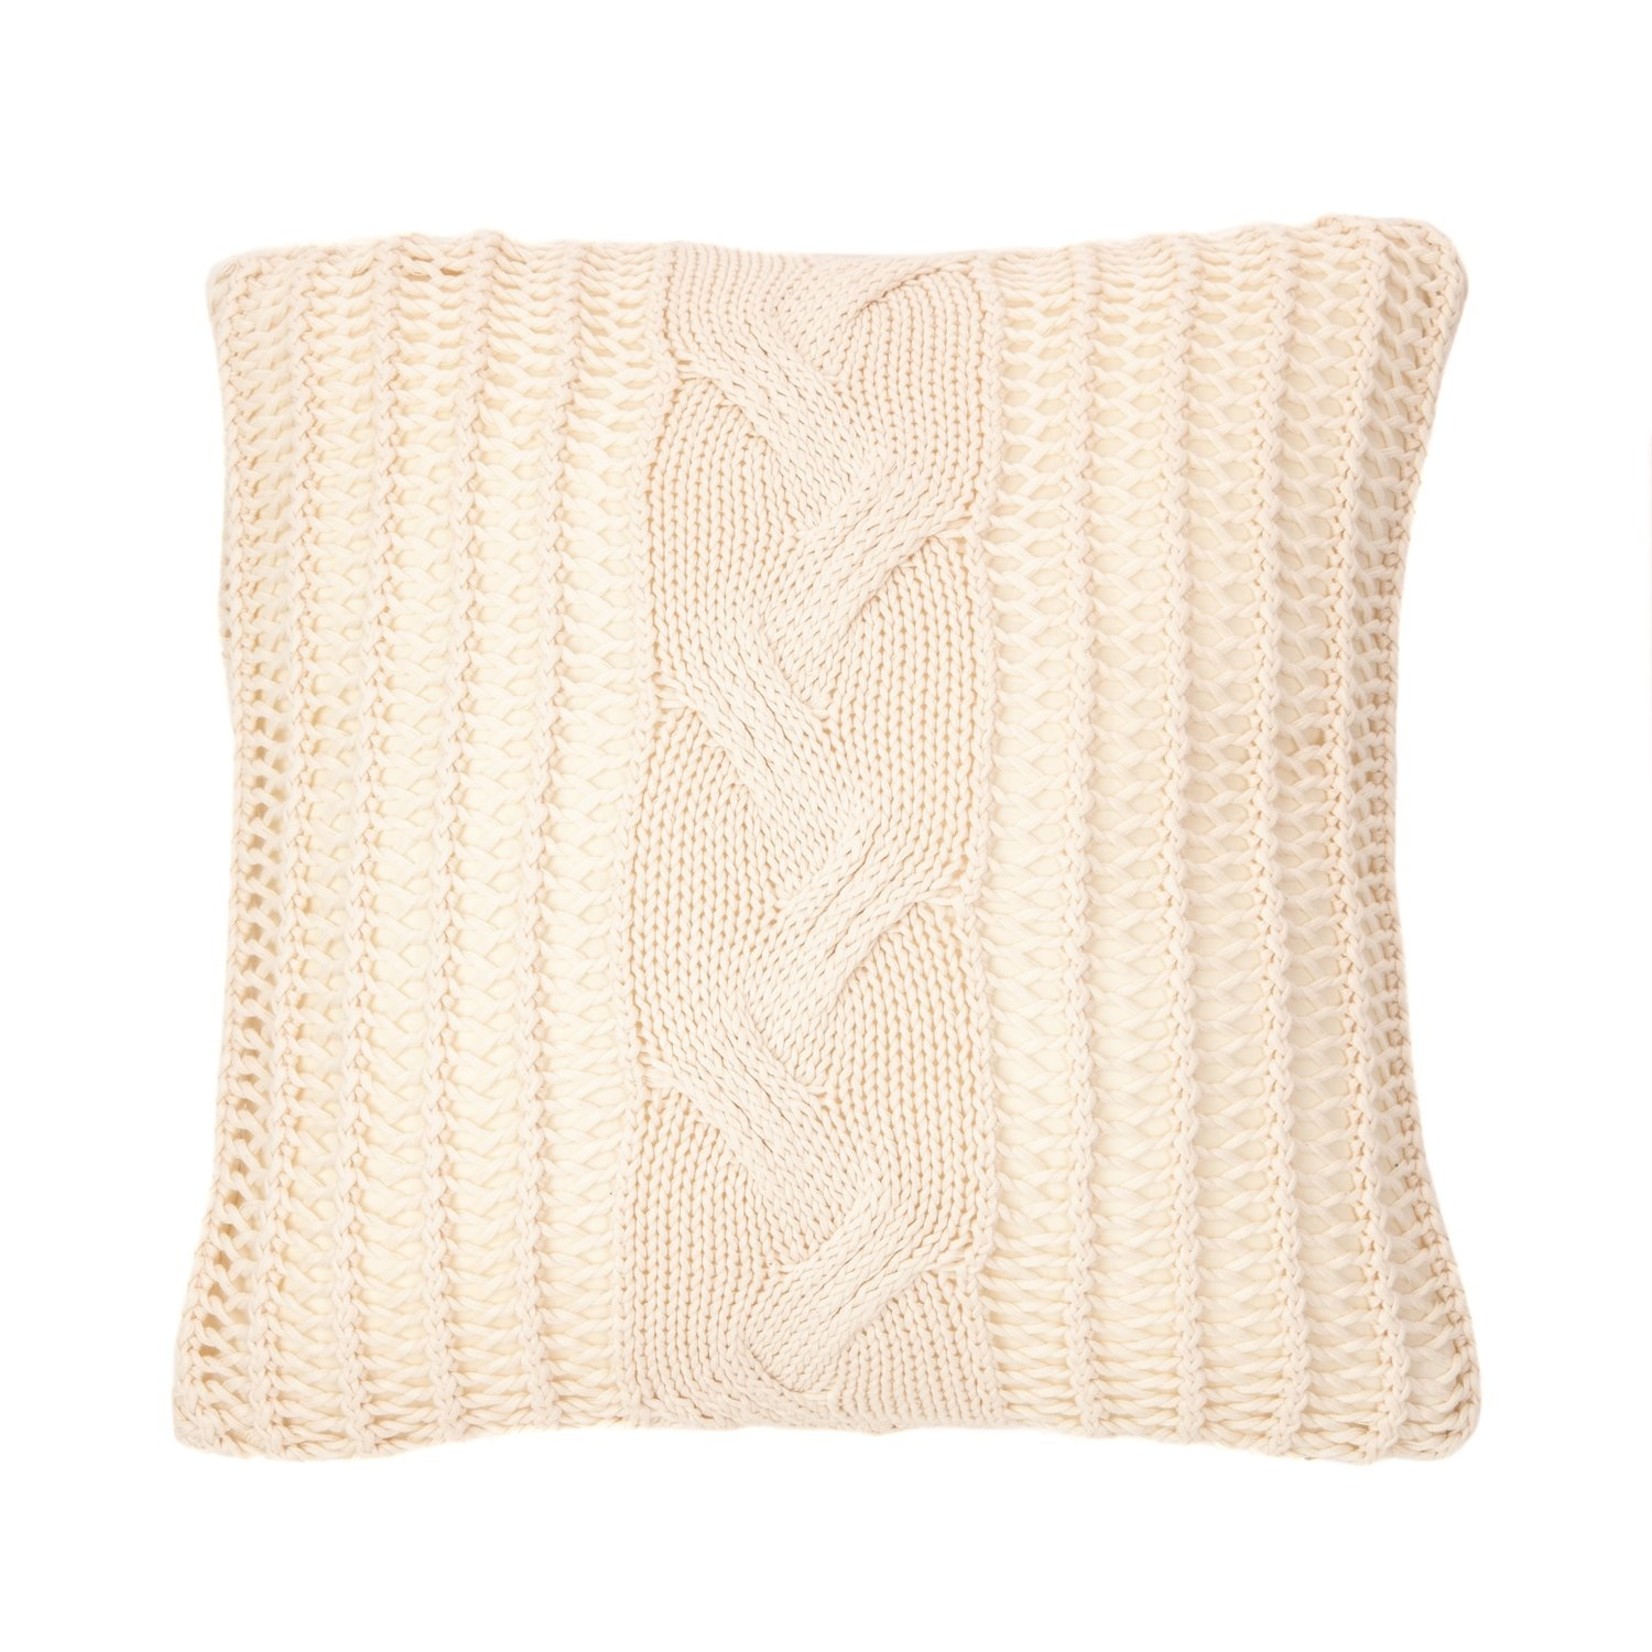 Brunelli Zira Ivory Knitted Cushion